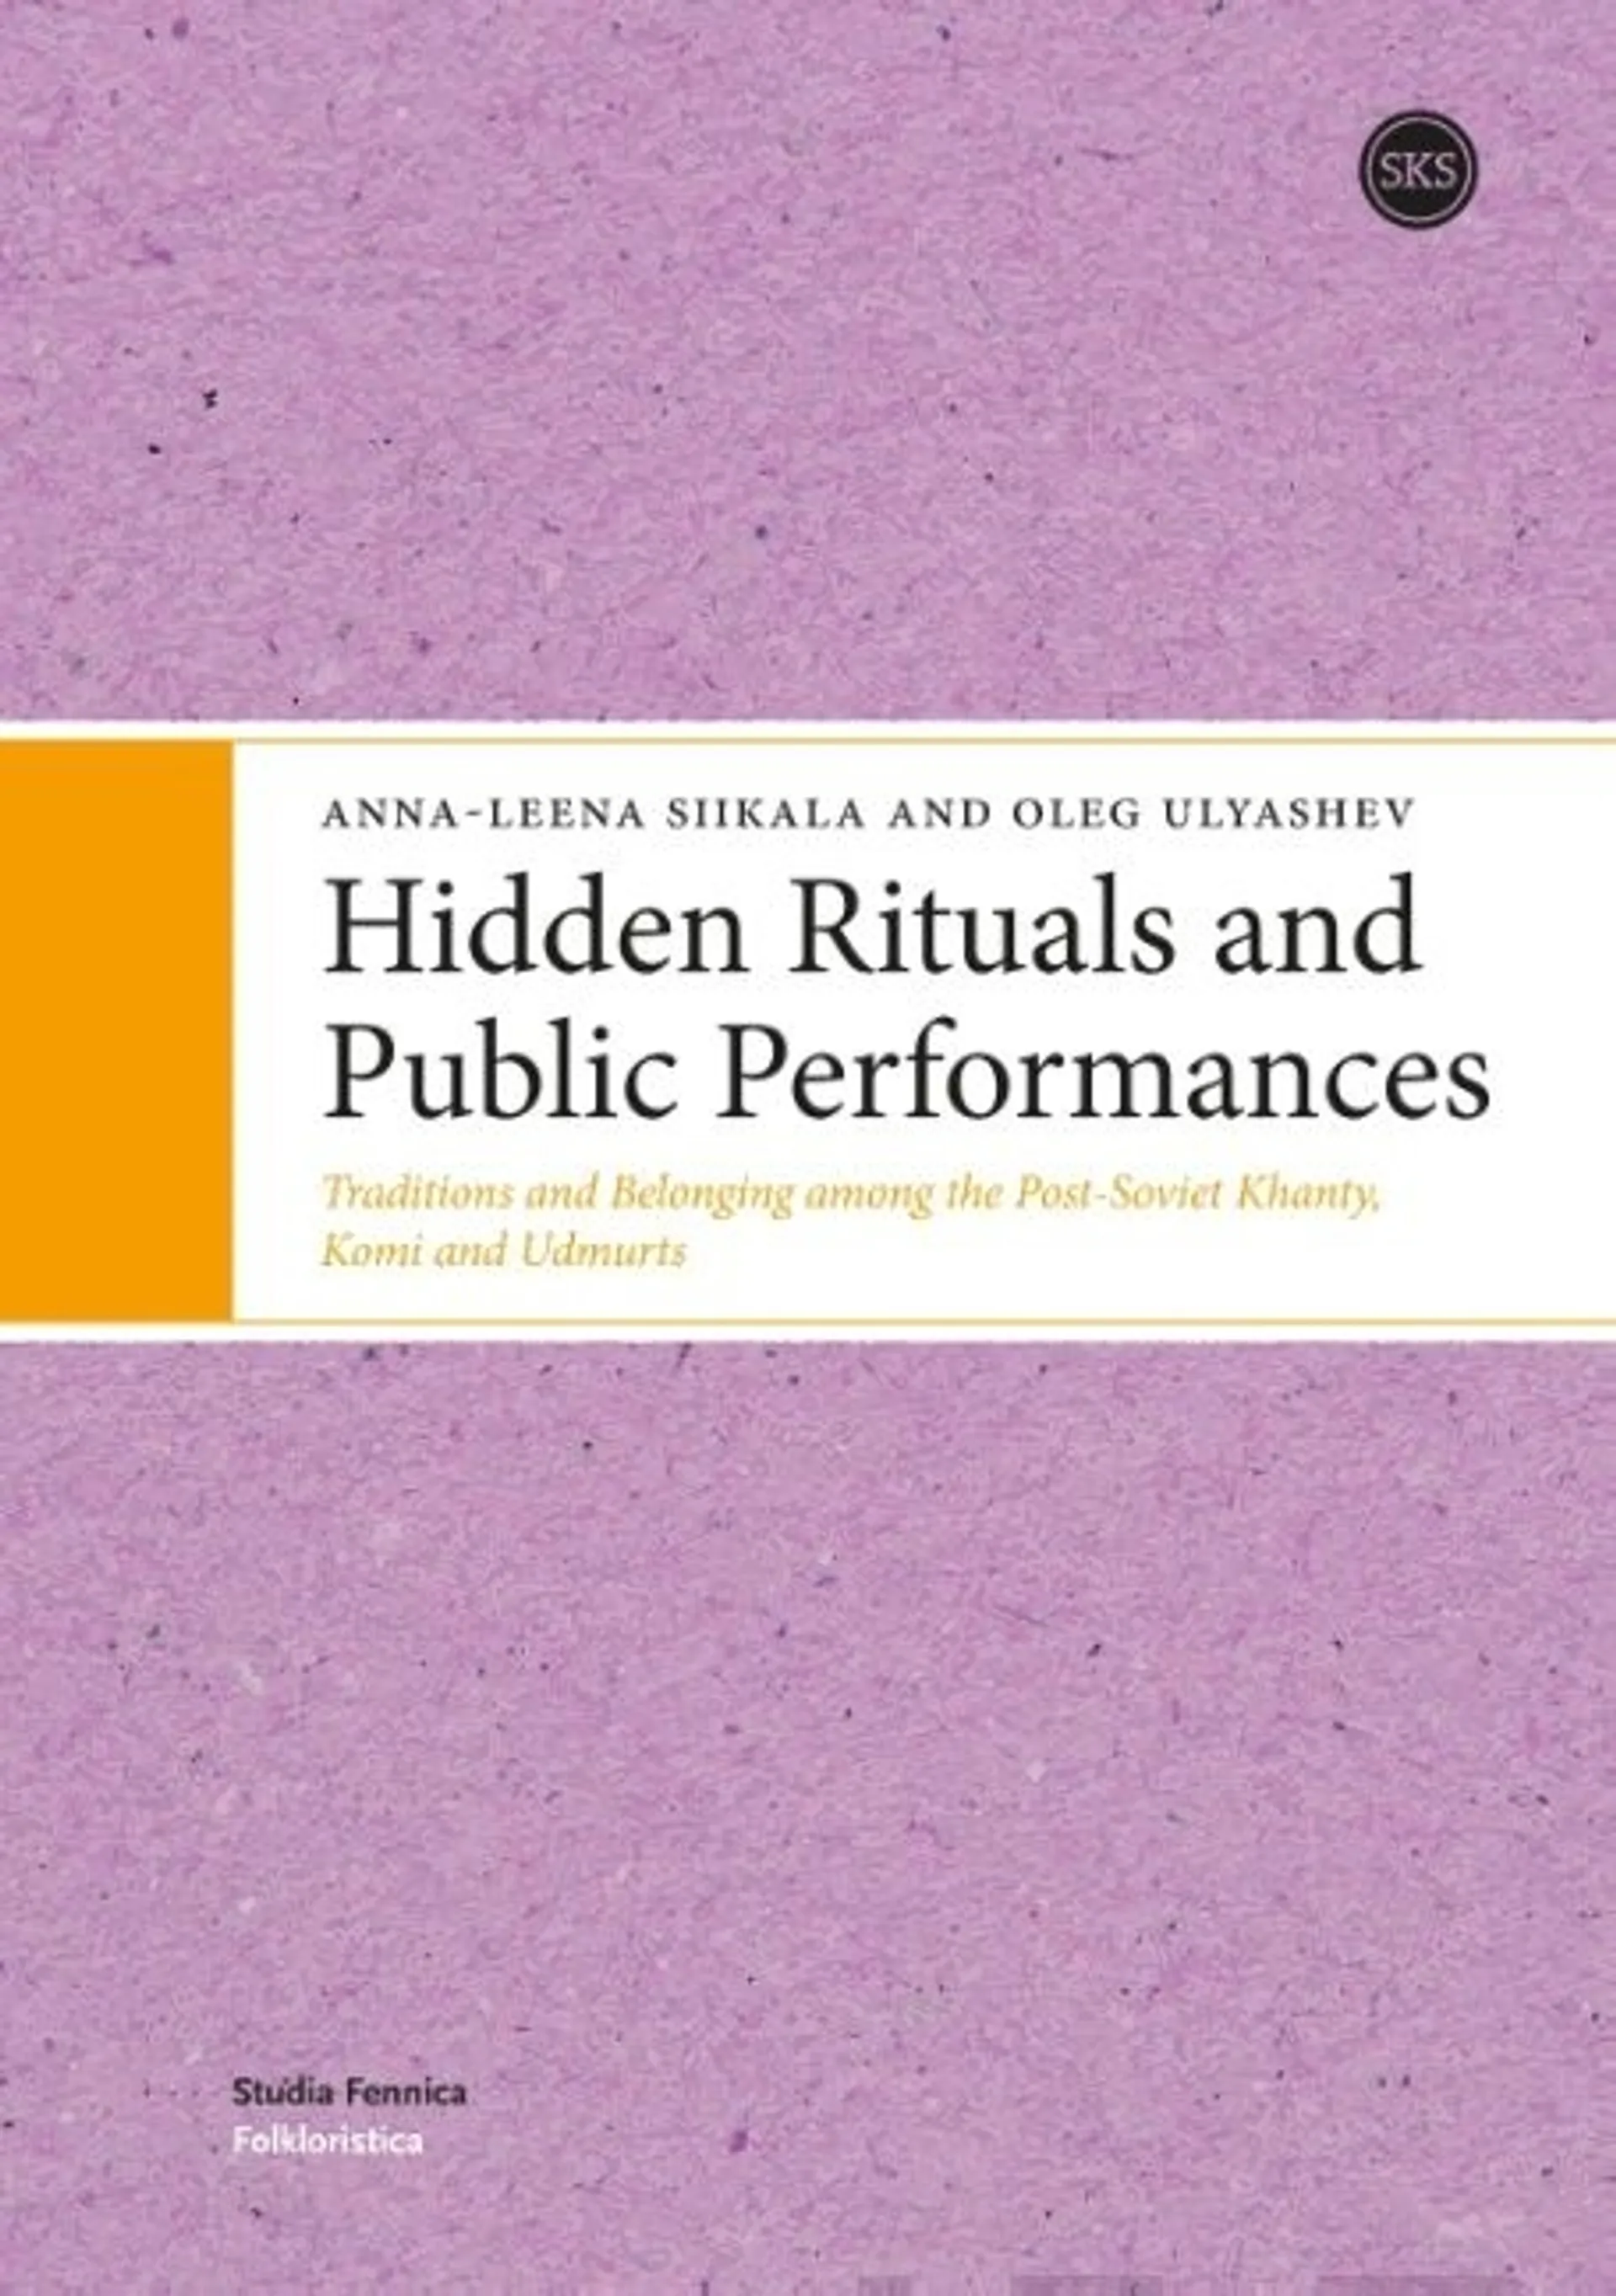 Siikala, Hidden Rituals and Public Performances